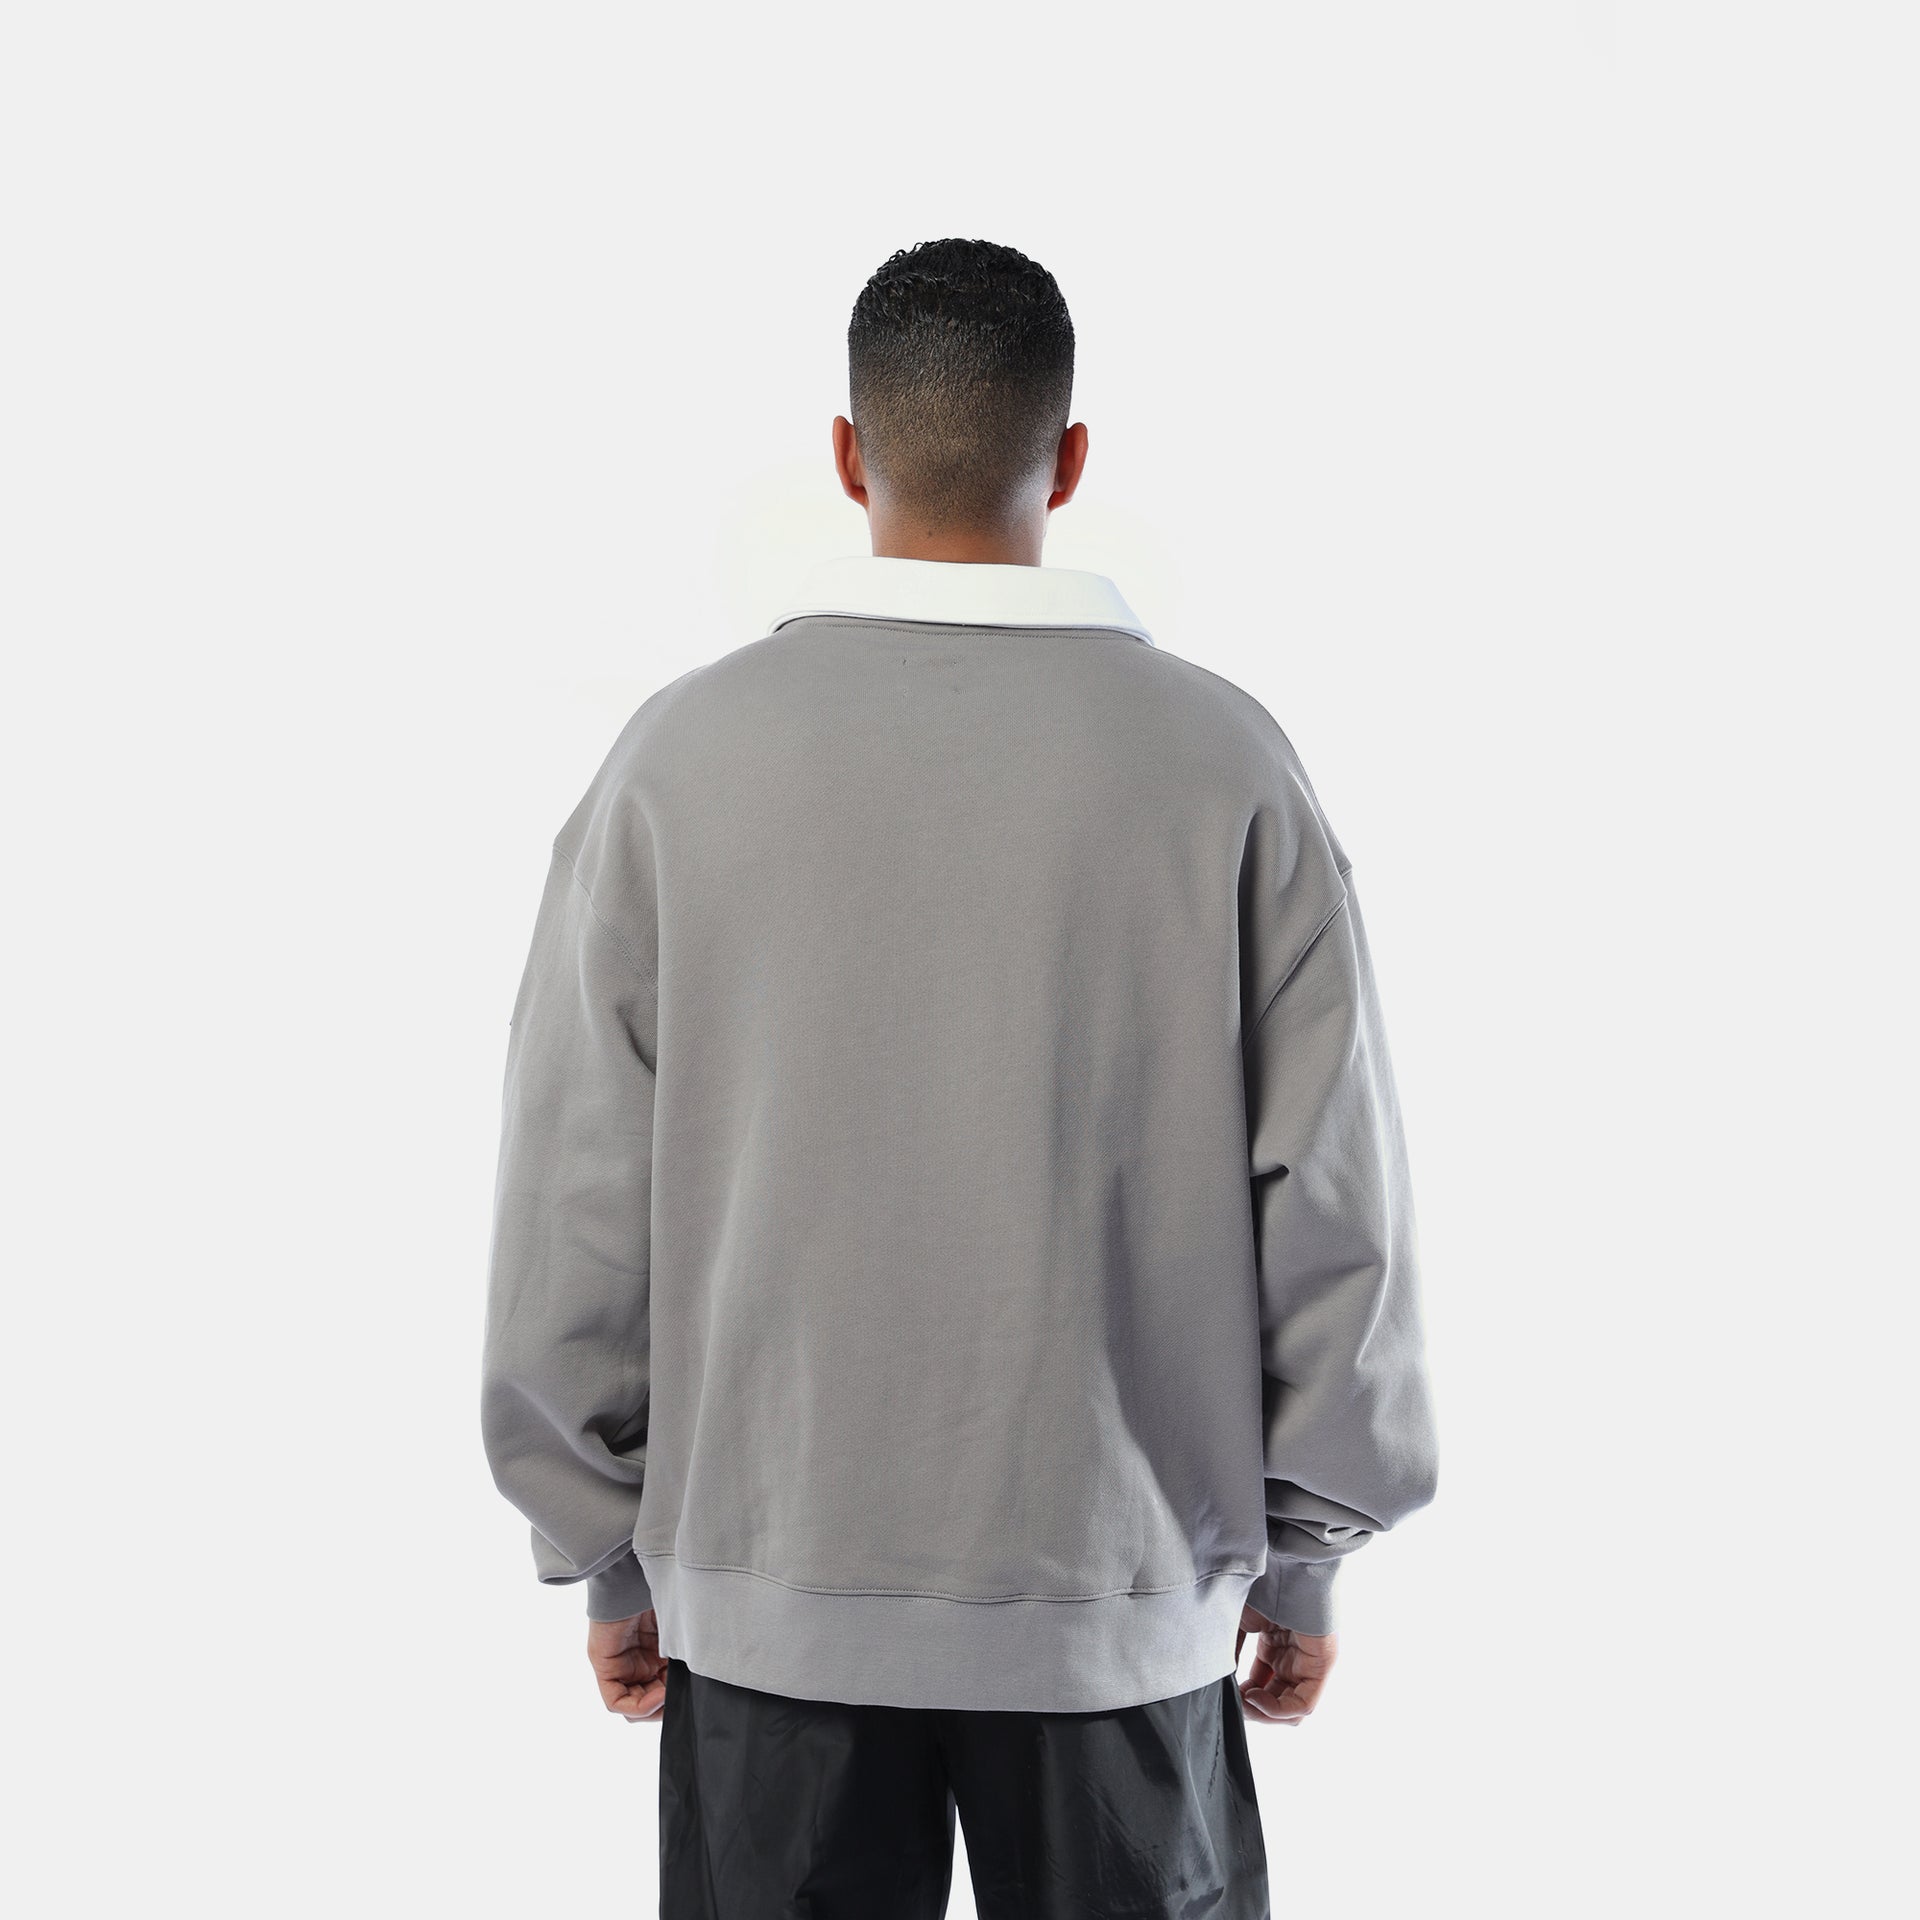 White collar Gray sweater